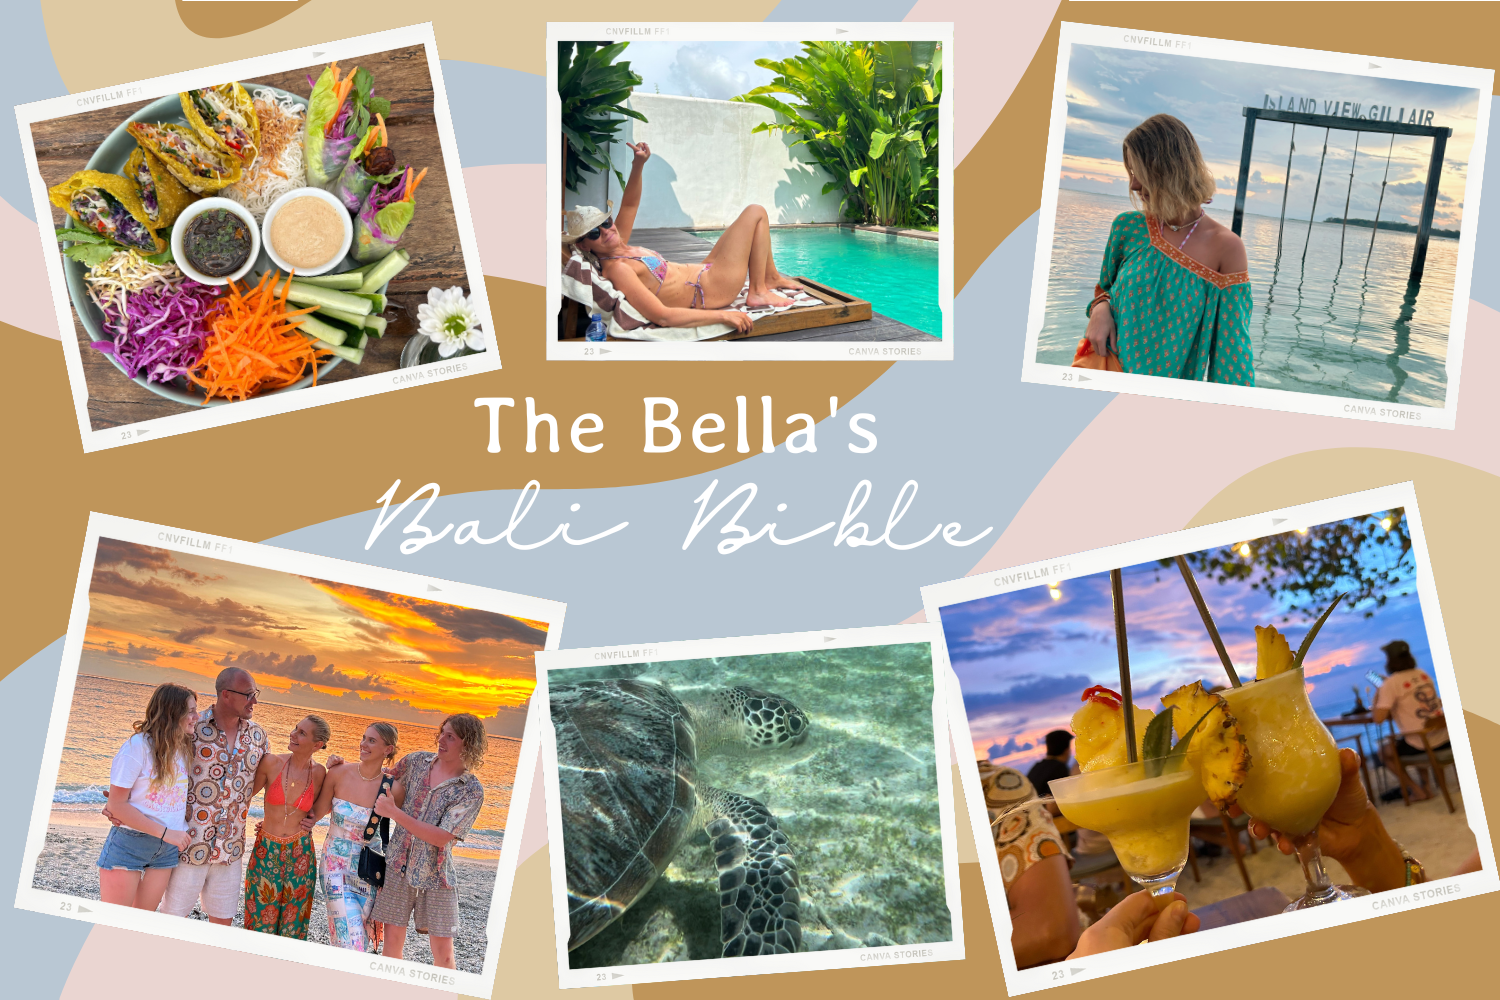 The Bella's Bali Bible